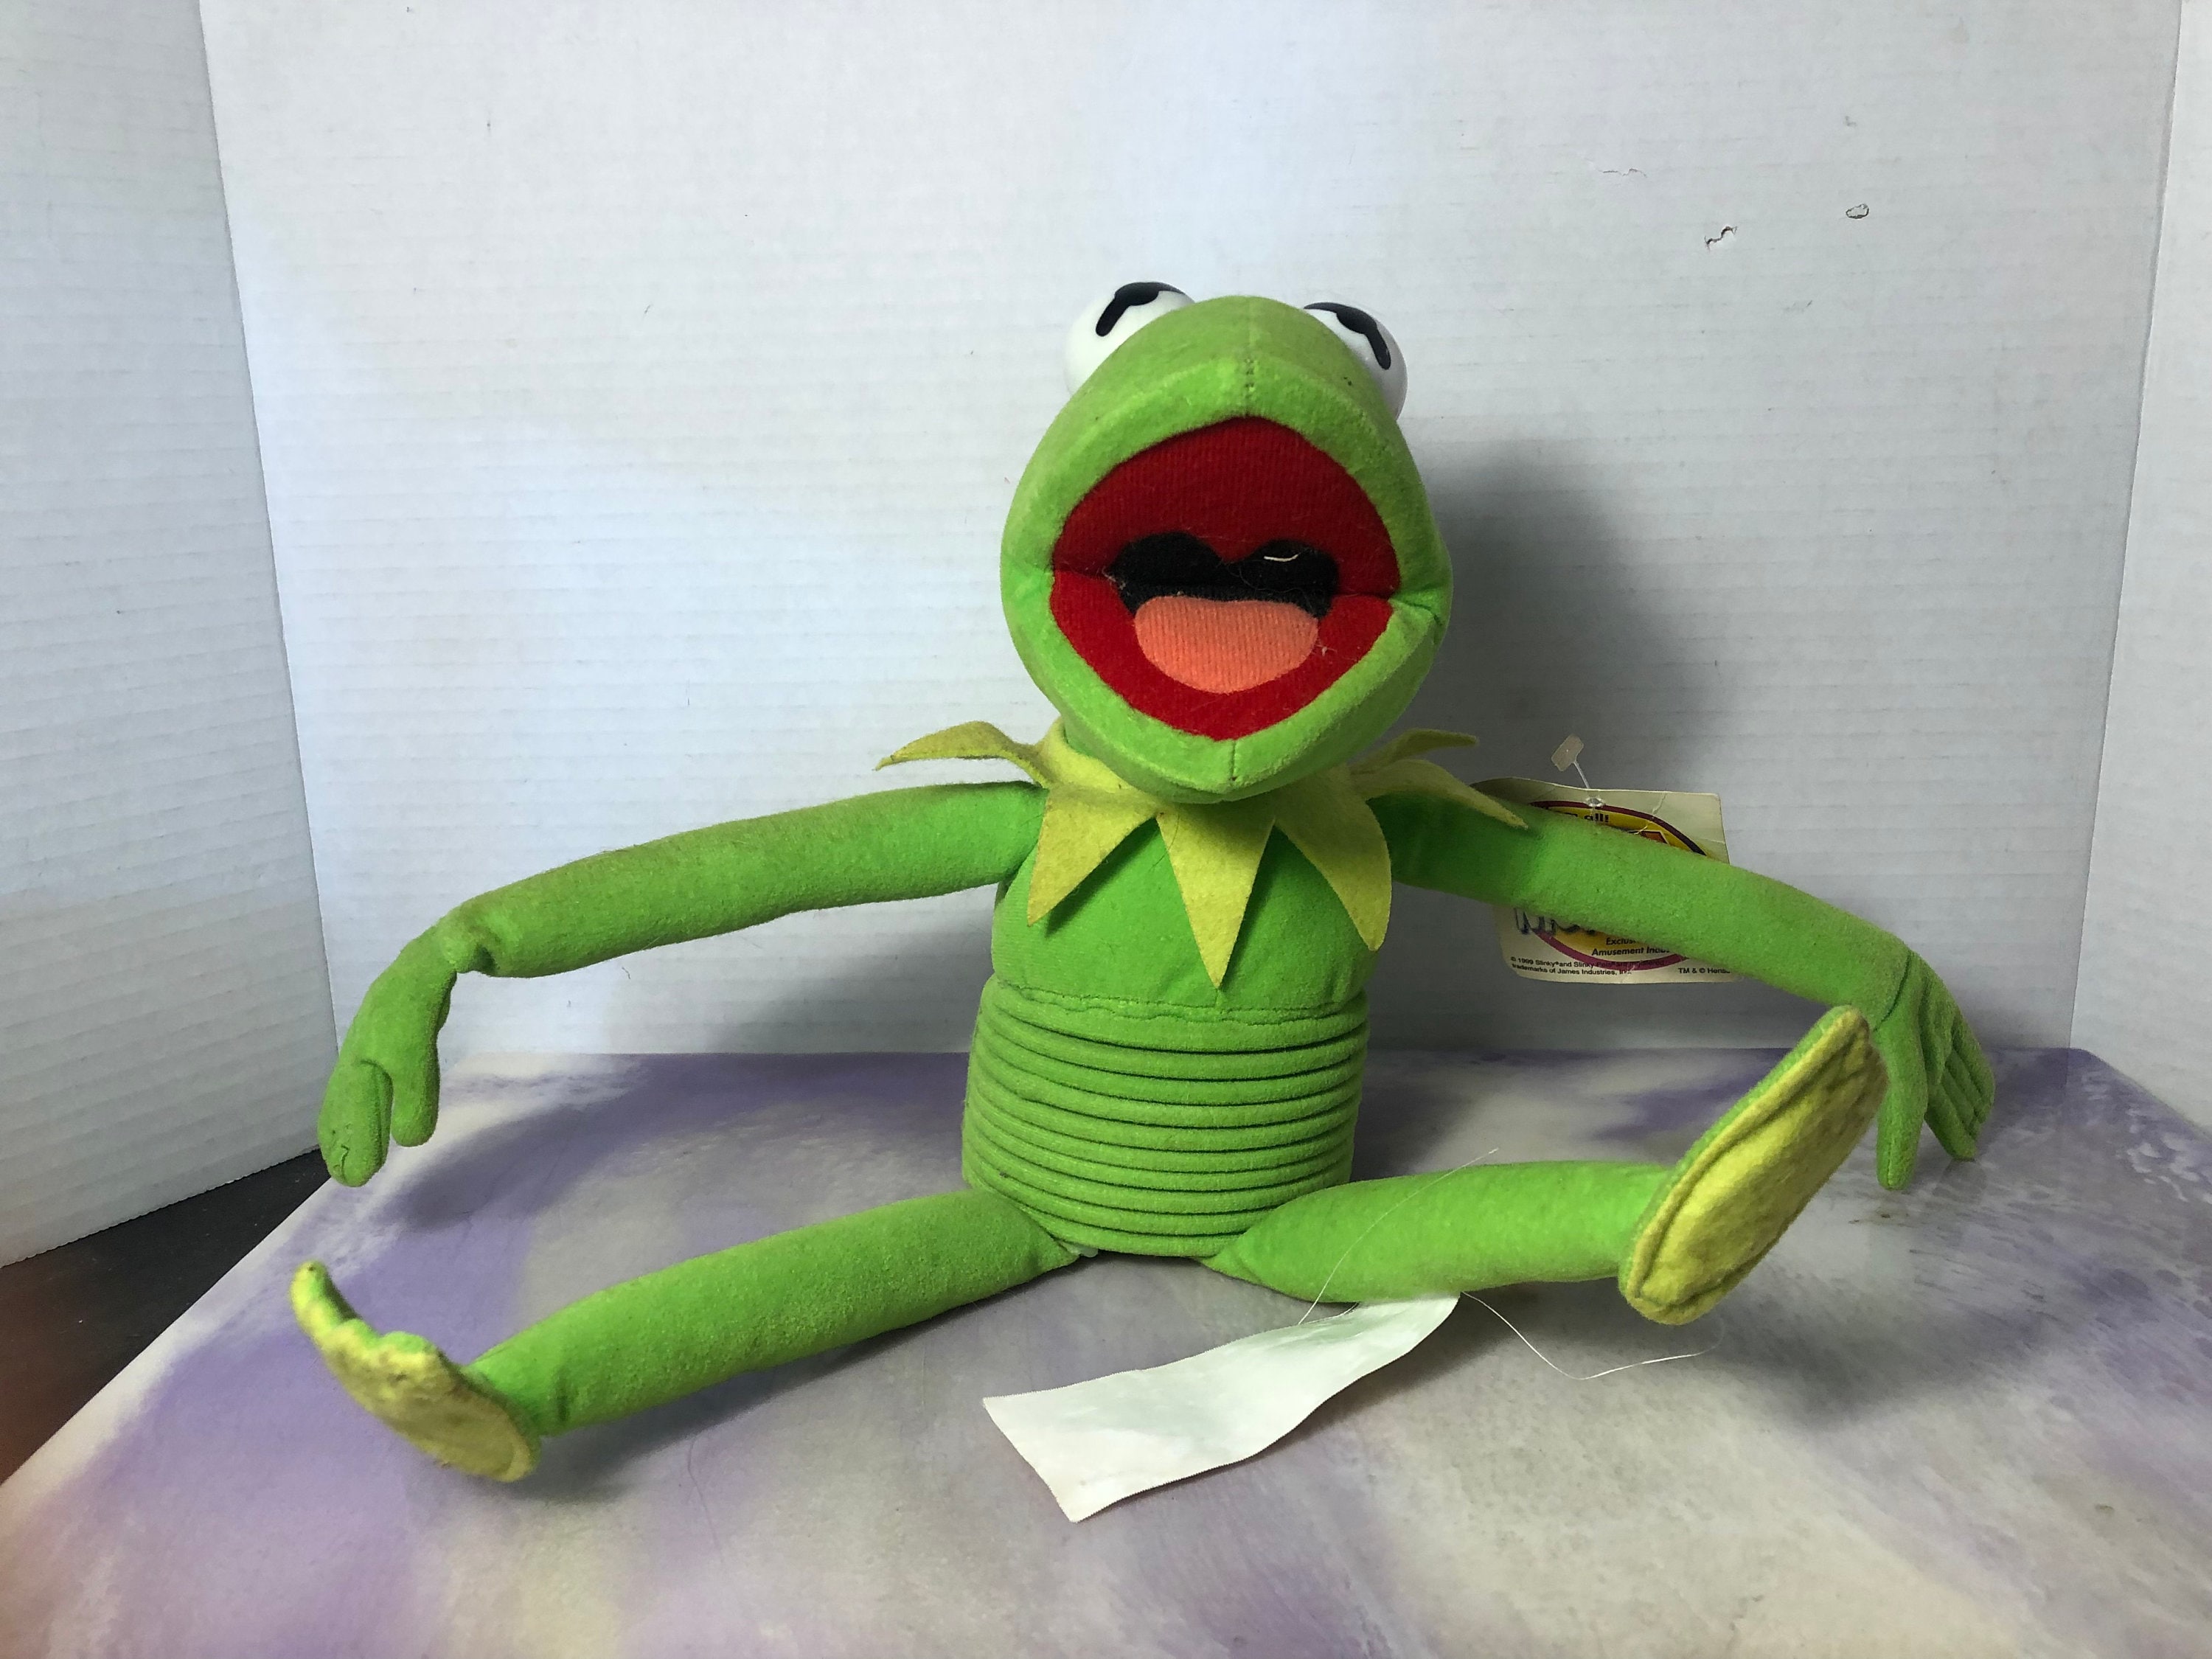 Animal en peluche GENERIQUE Peluche Kermit the Frog la grenouille